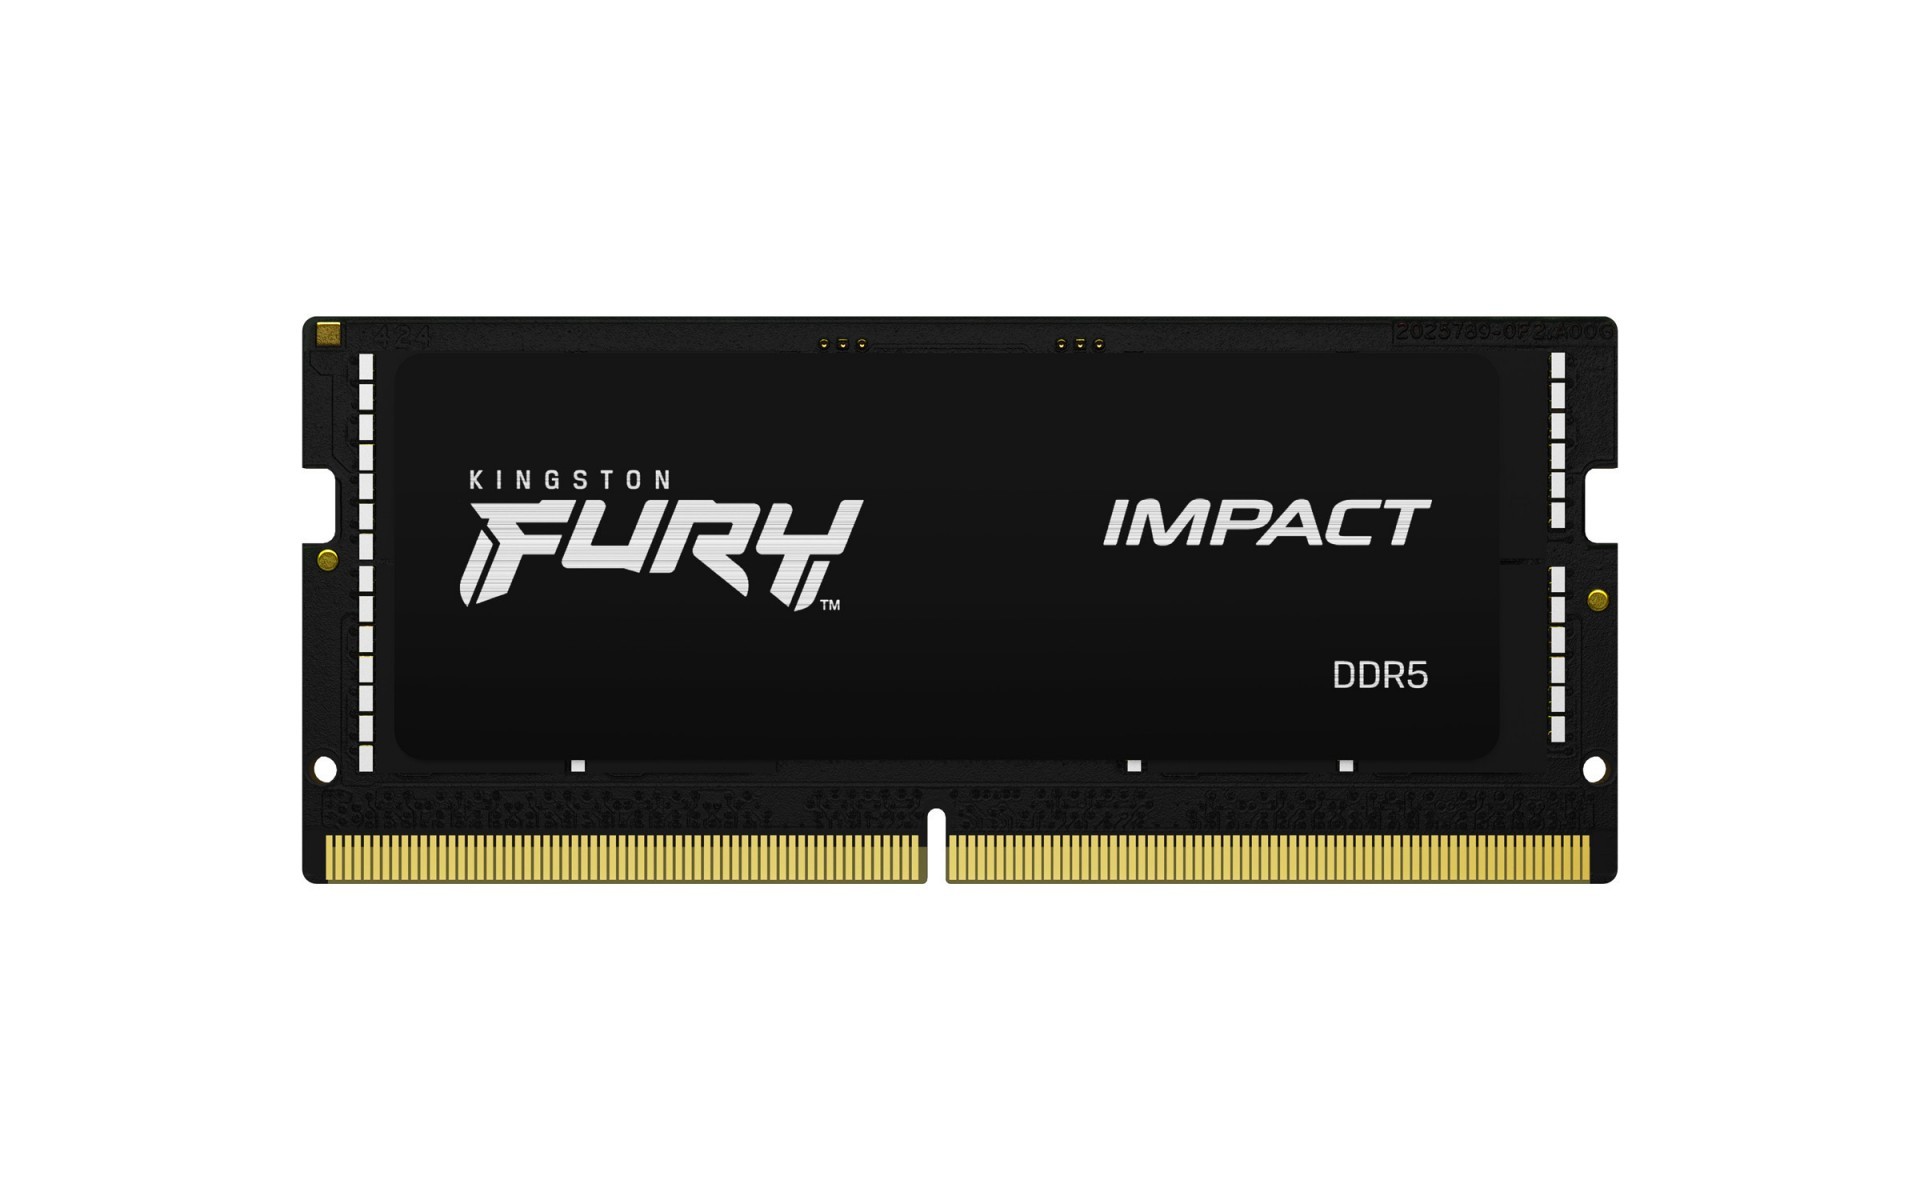 Kingston FURY Impact DDR5 SODIMM 記憶體在台上市